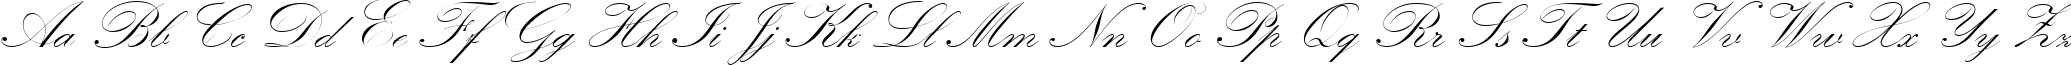 Пример написания английского алфавита шрифтом KunstlerschreibschDMed